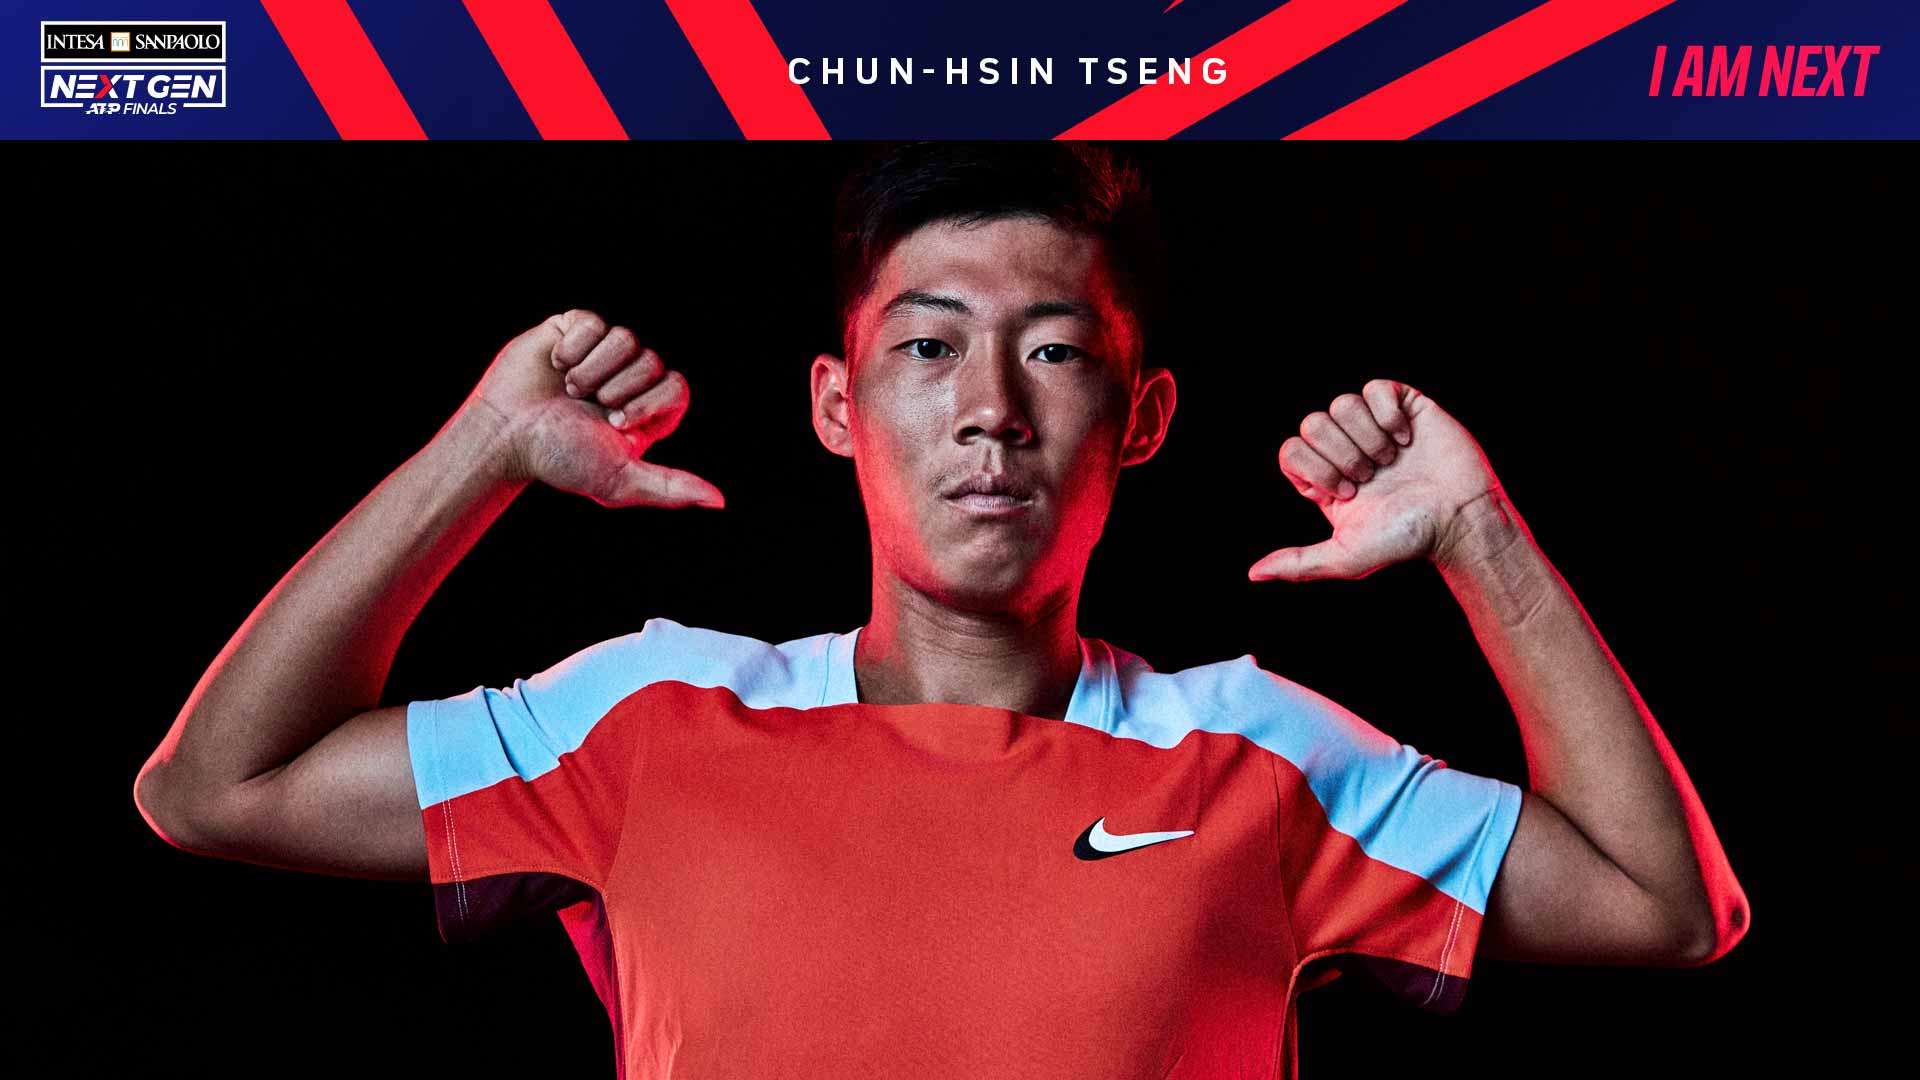 Chun-Hsin Tseng is making his debut in Milan.